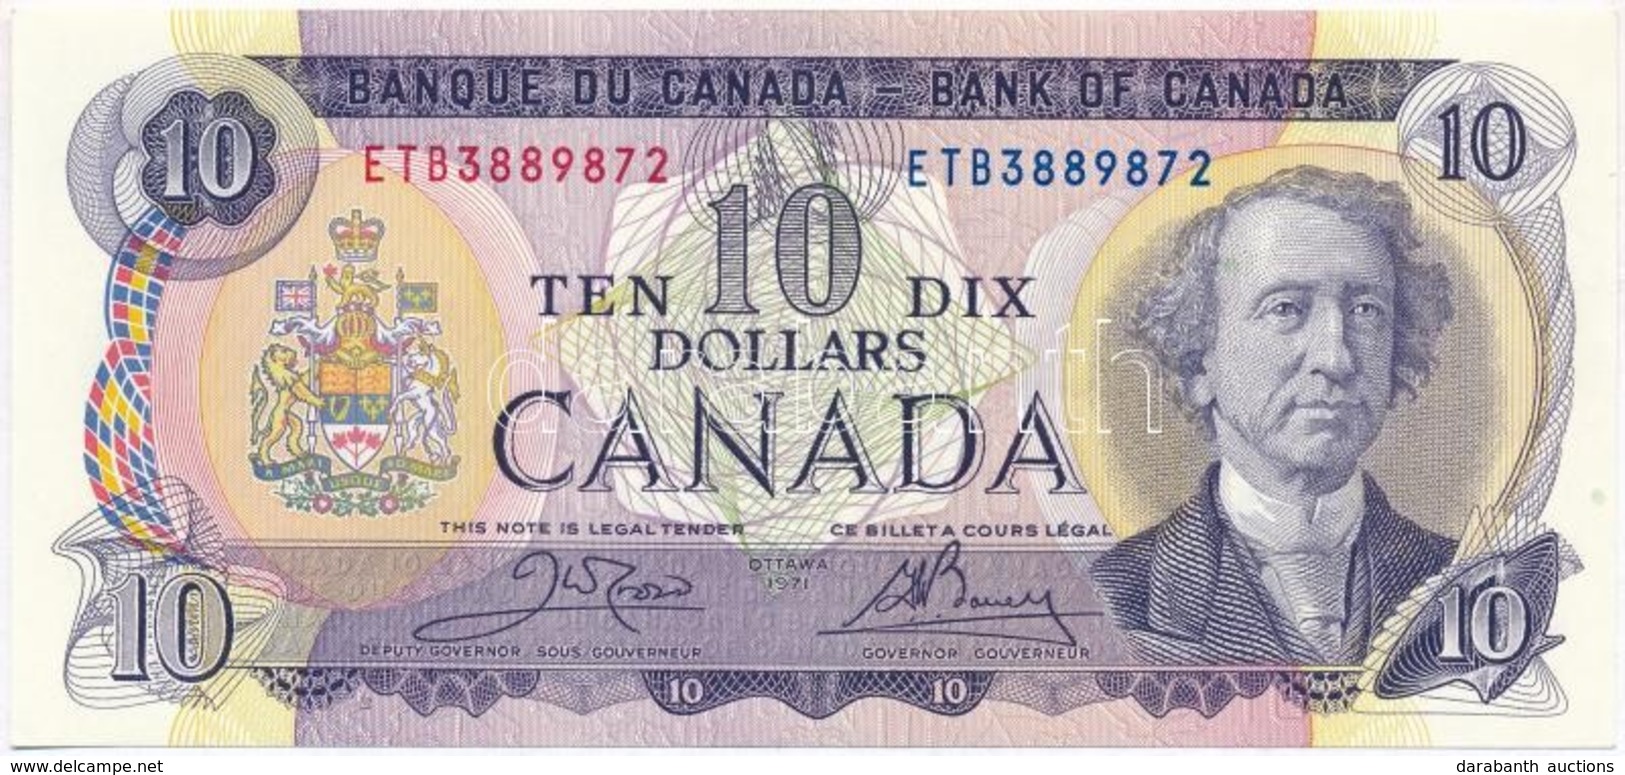 Kanada 1971. 10$ T:I
Canada 1971. 10 Dollars C:UNC
Krause KM#88 - Unclassified